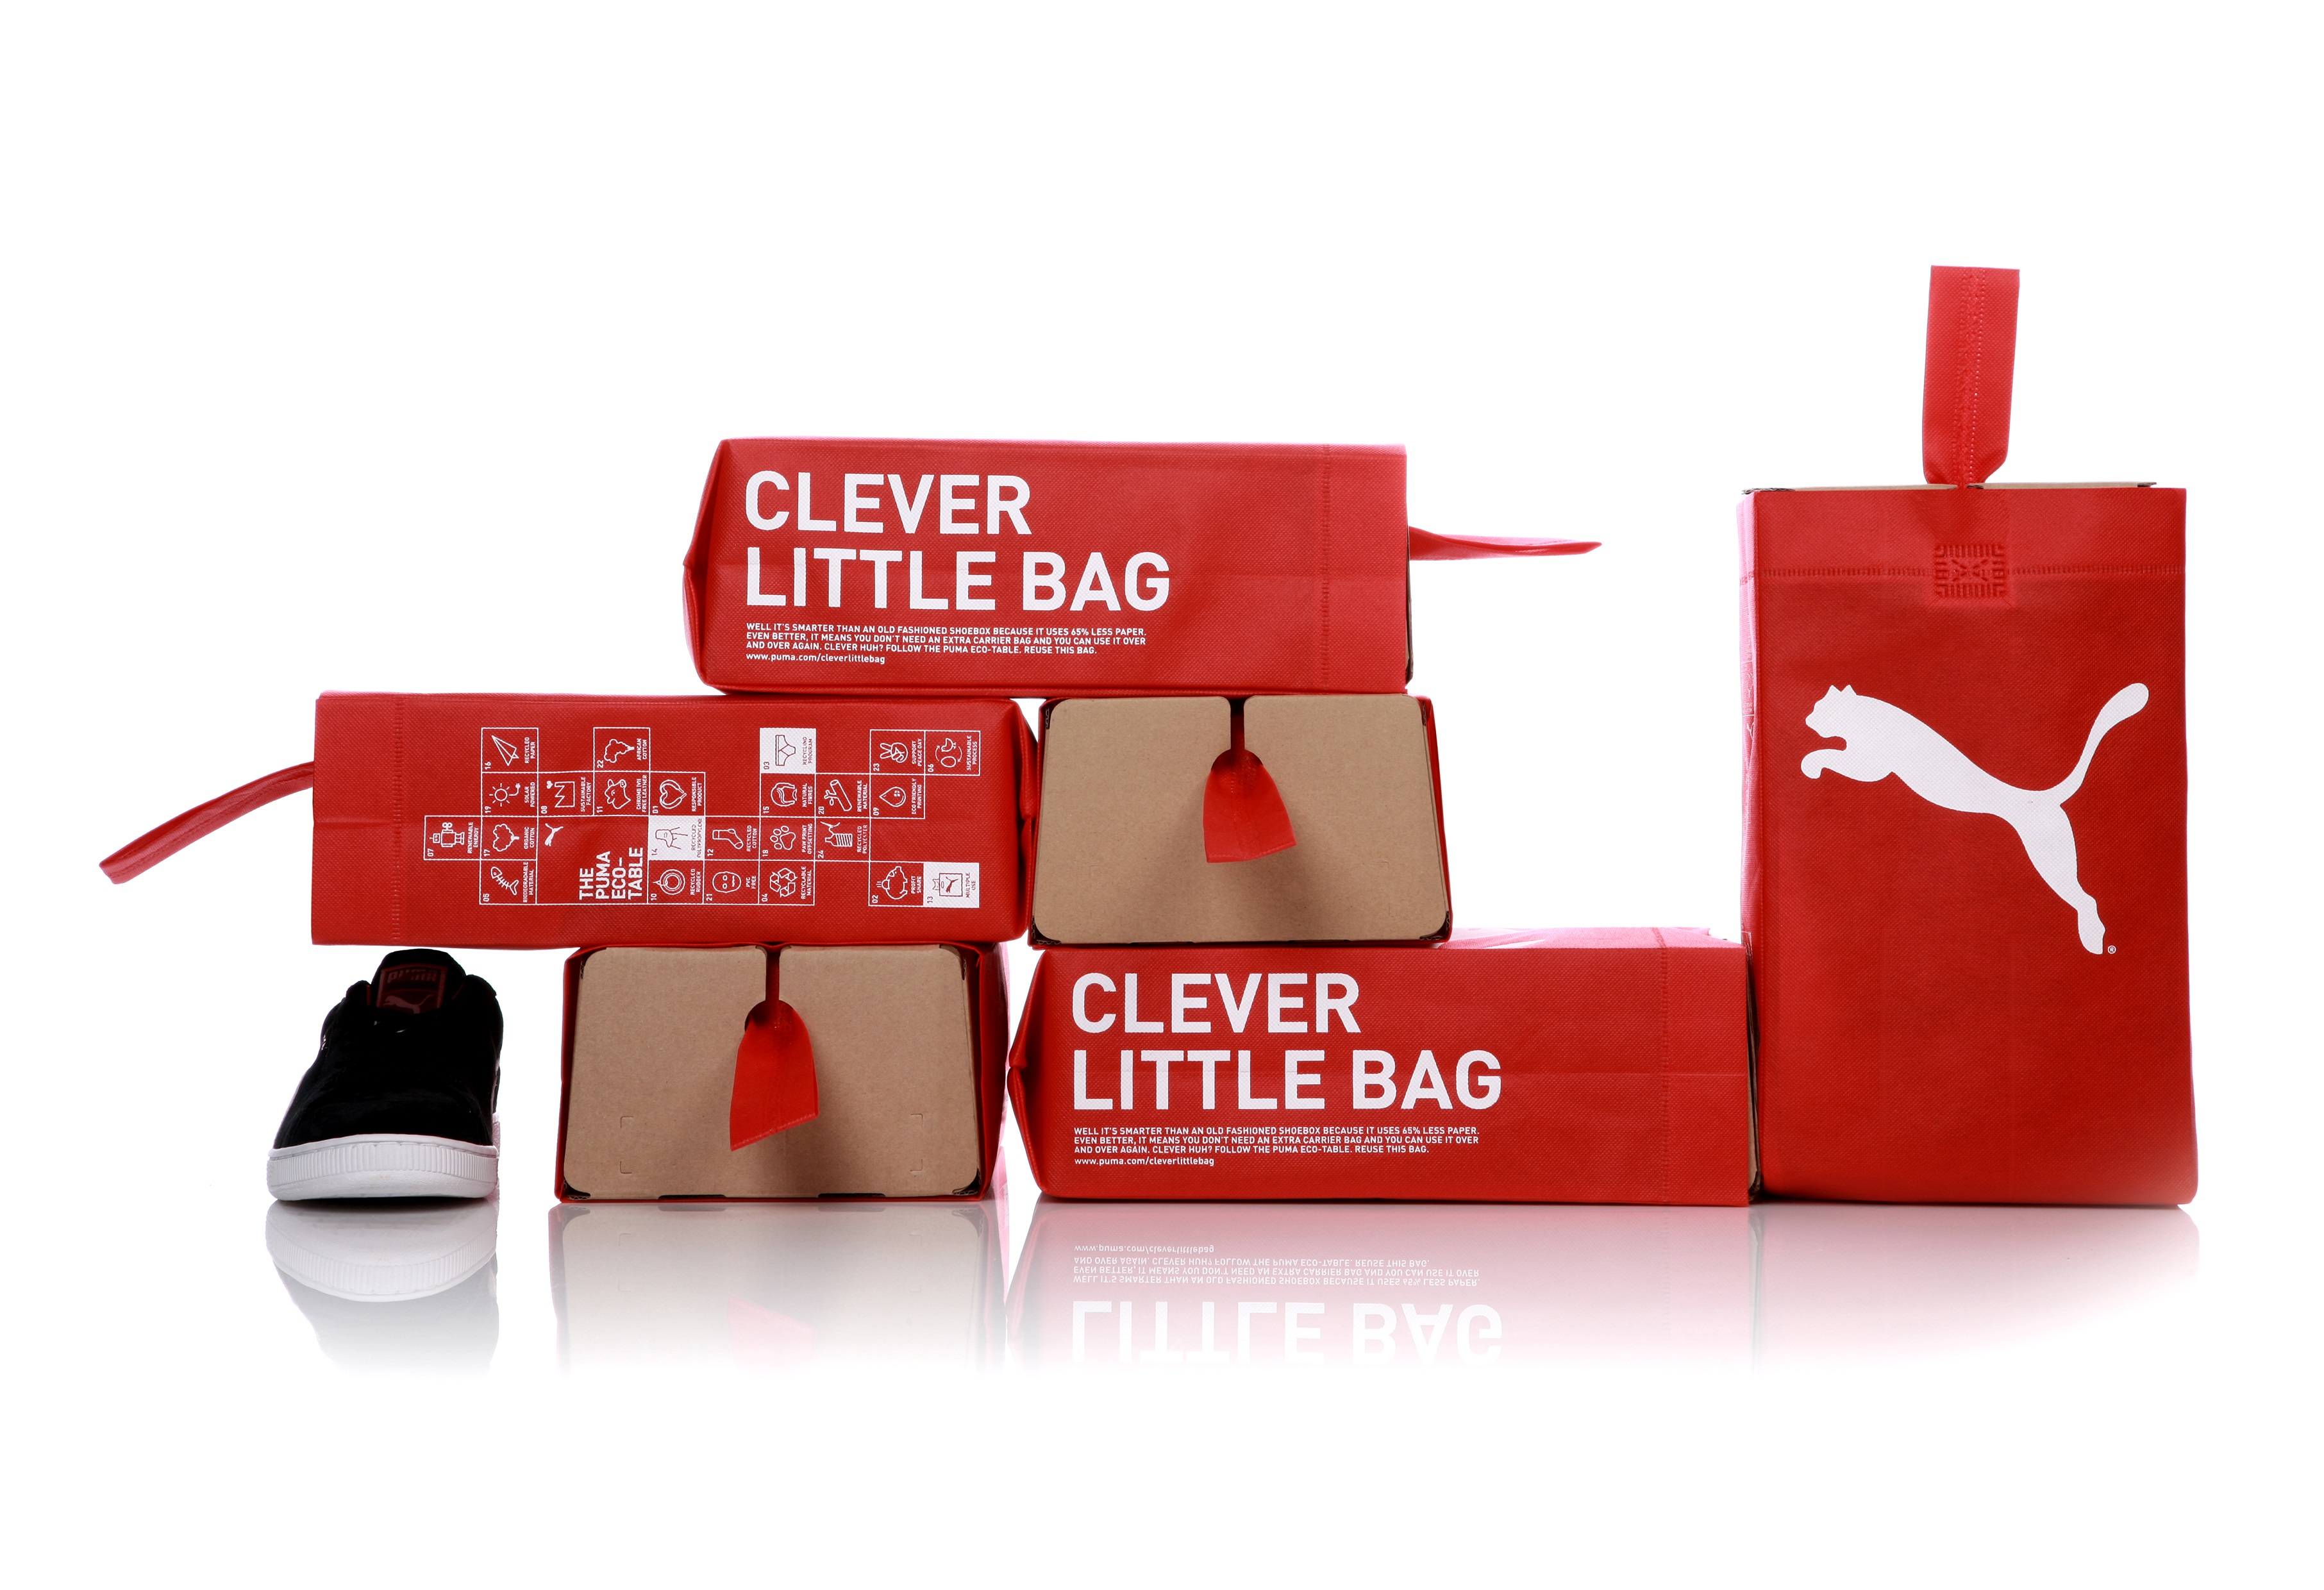 PUMA's “Clever Little Bag”